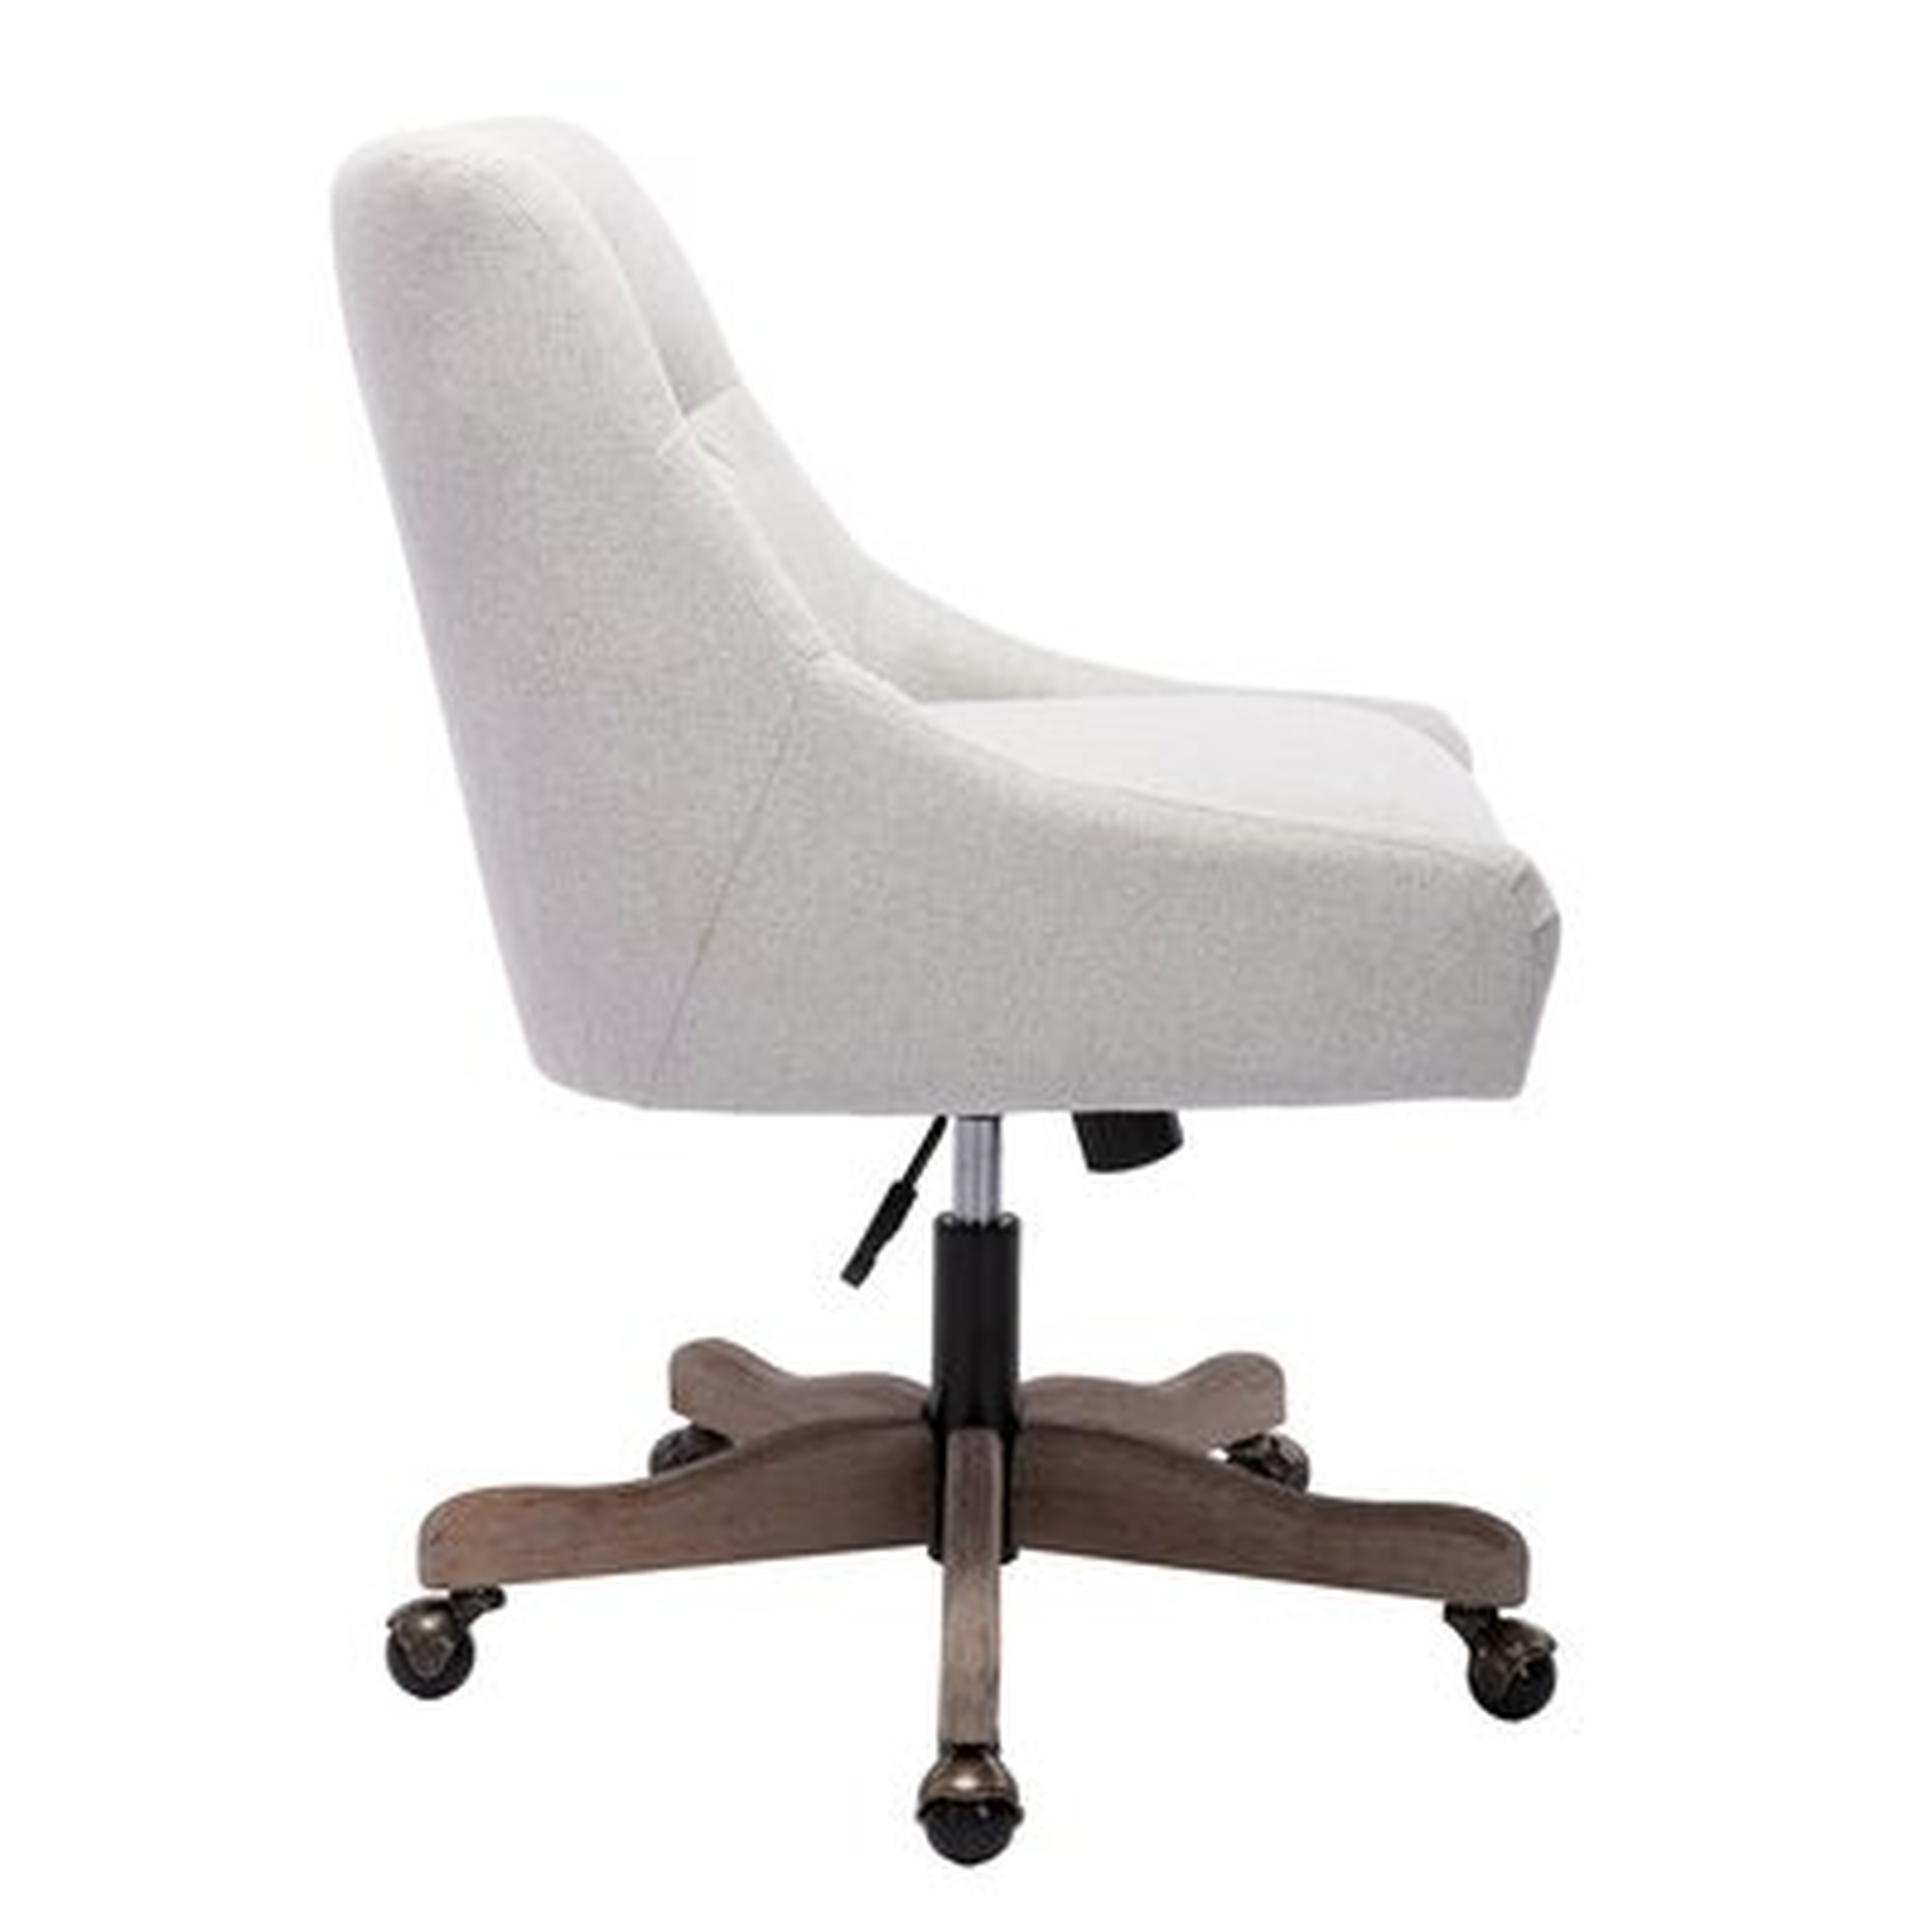 Swivel Shell Chair For Living Roommodern Leisure Office Chair - Wayfair